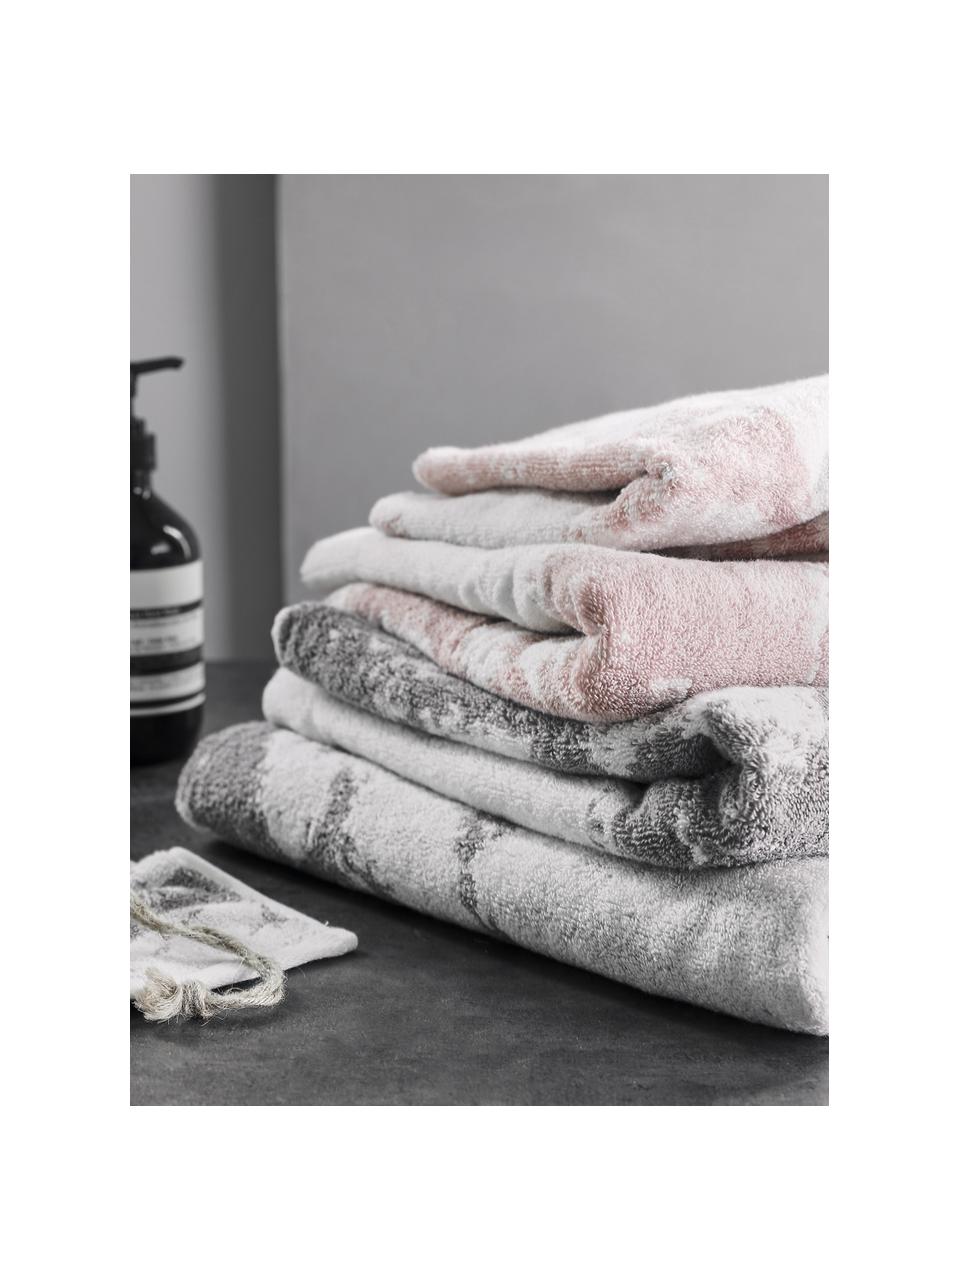 Handtuch-Set Malin mit Marmor-Print, 3-tlg., Rosa, Cremeweiß, mit Marmor-Print, Set mit verschiedenen Größen